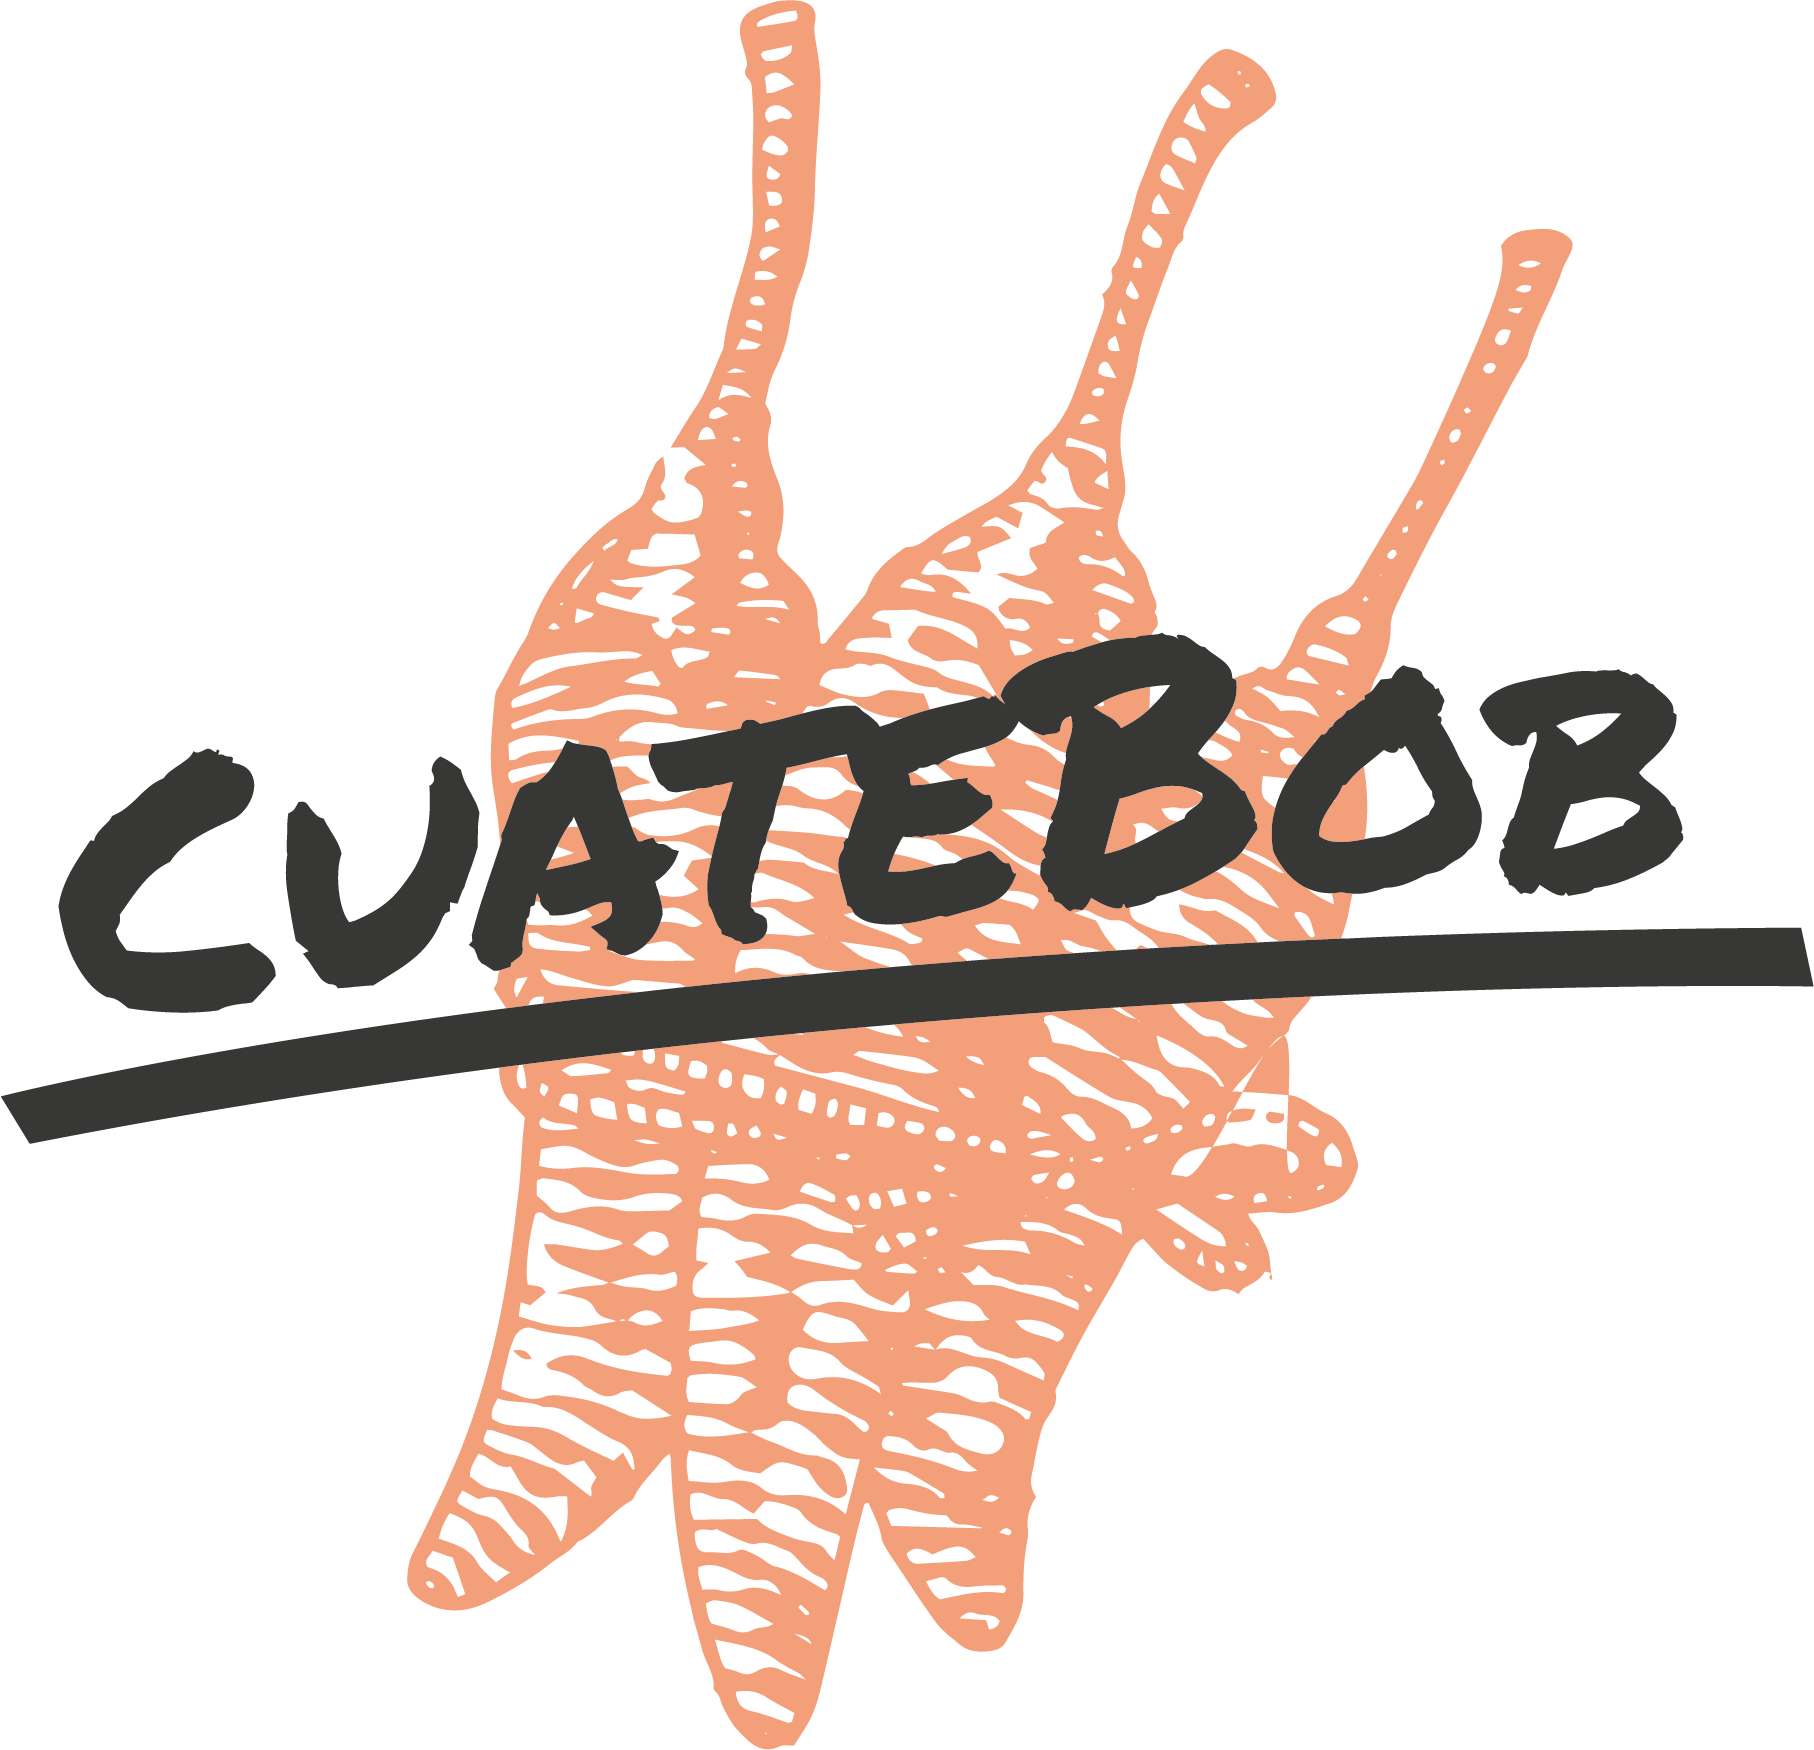 CuateBob - 01